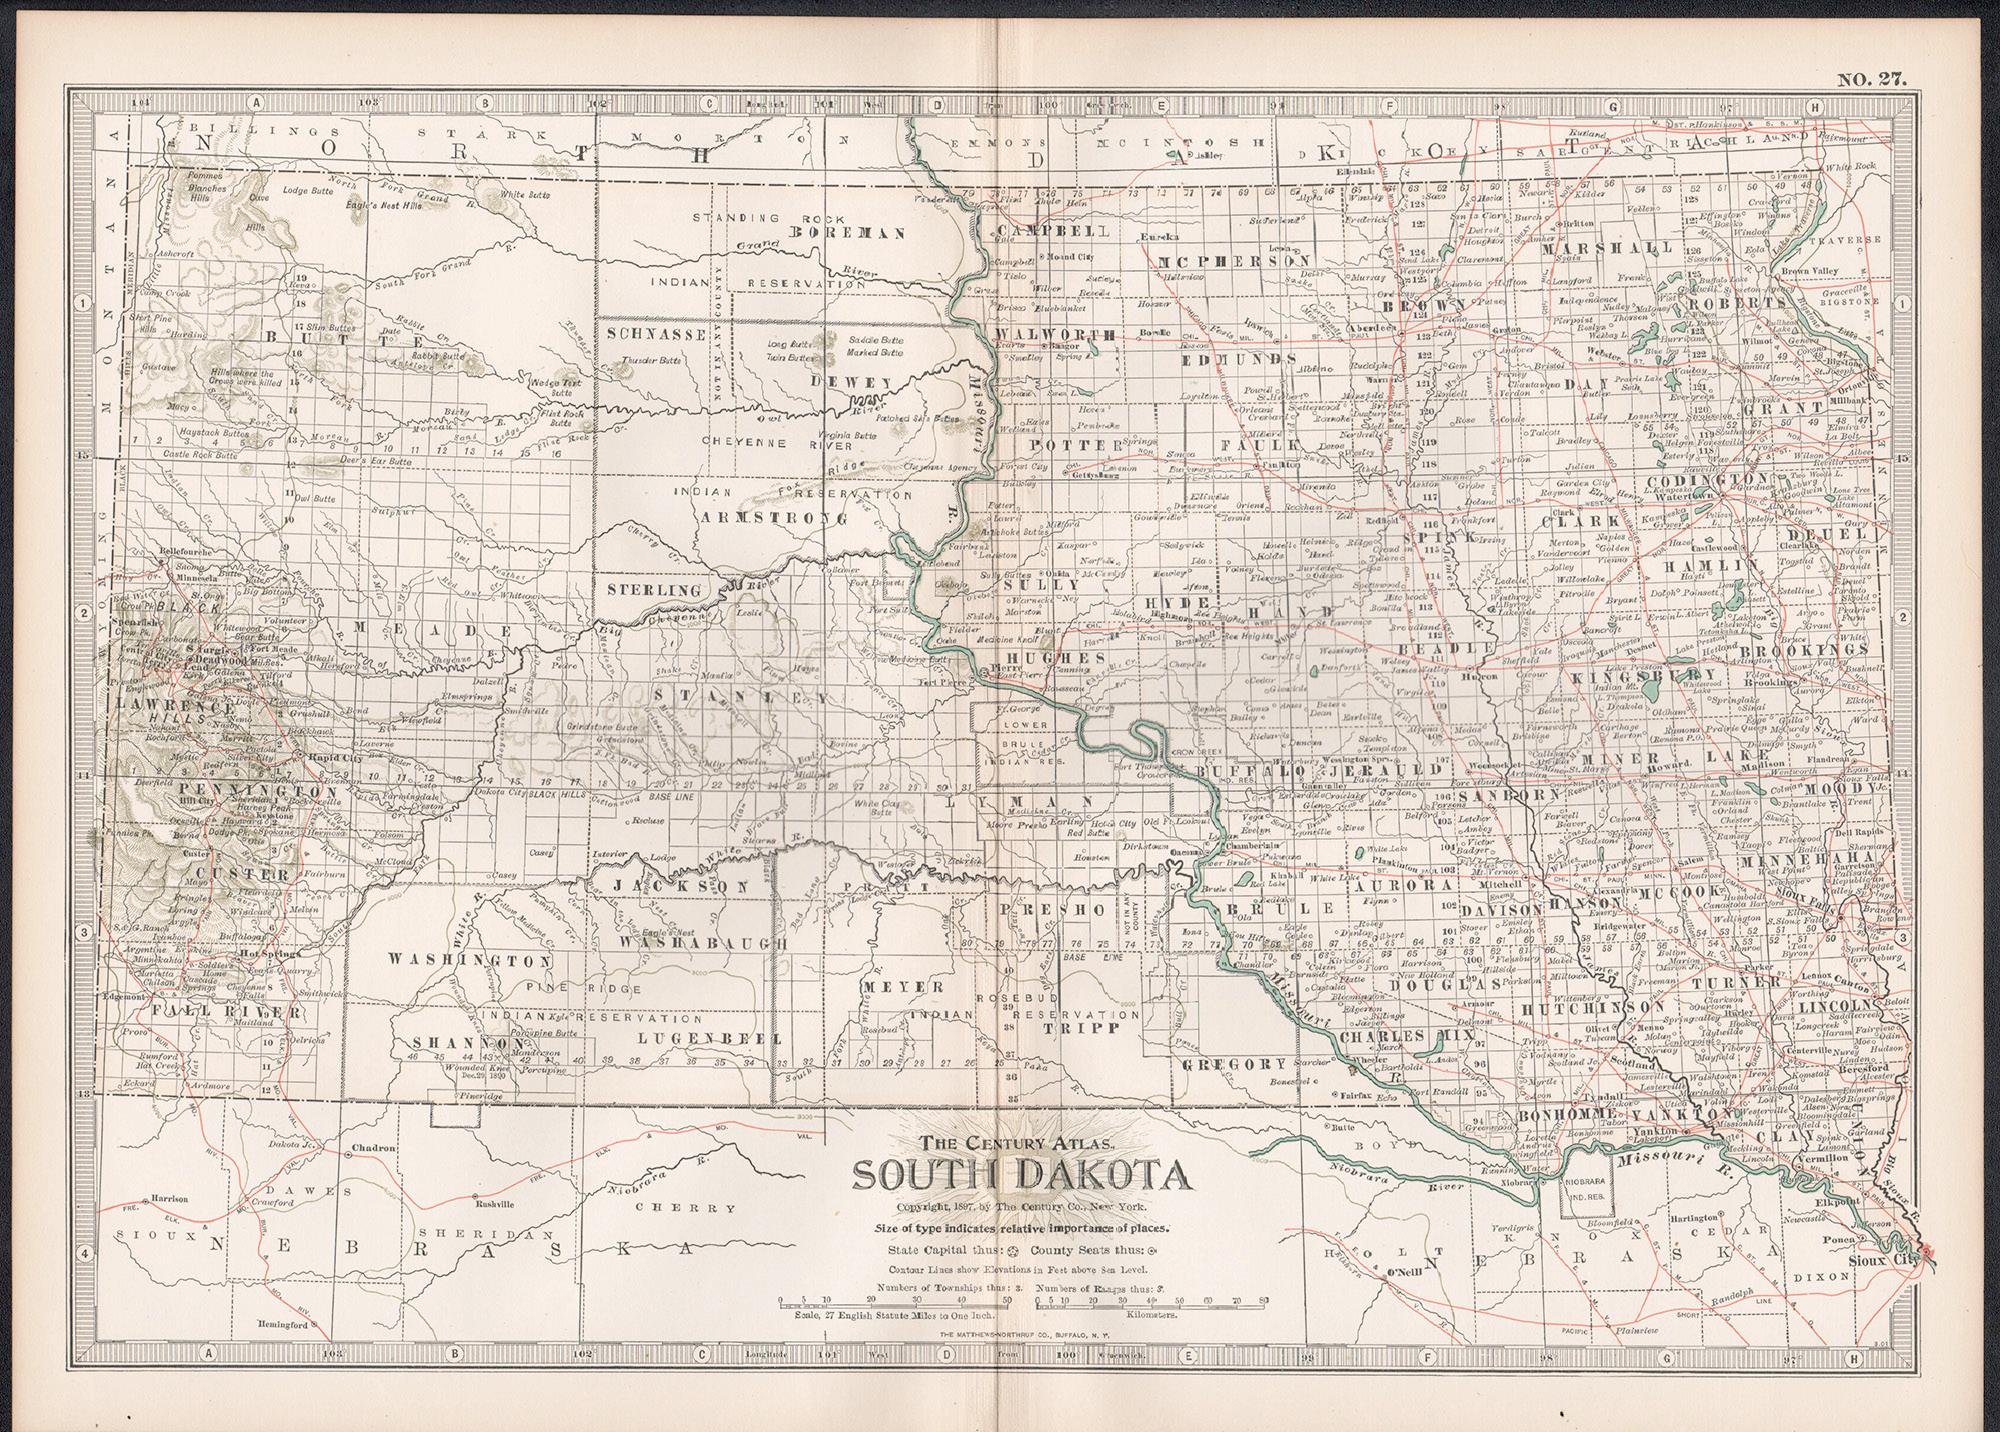 South Dakota. USA. Century Atlas state antique vintage map - Print by Unknown